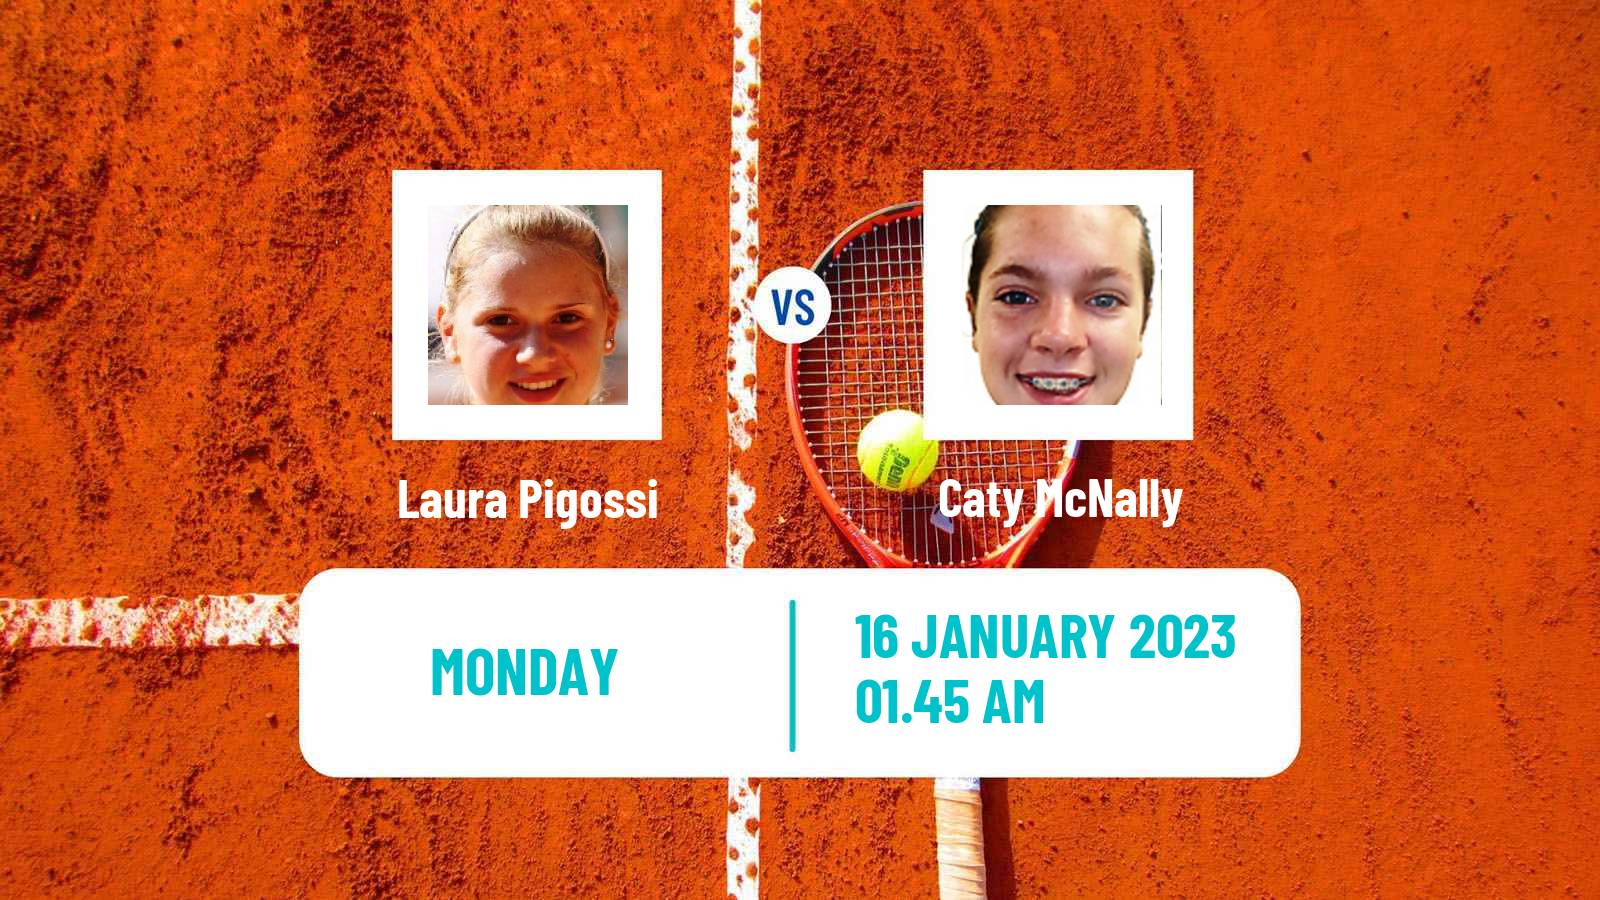 Tennis WTA Australian Open Laura Pigossi - Caty McNally